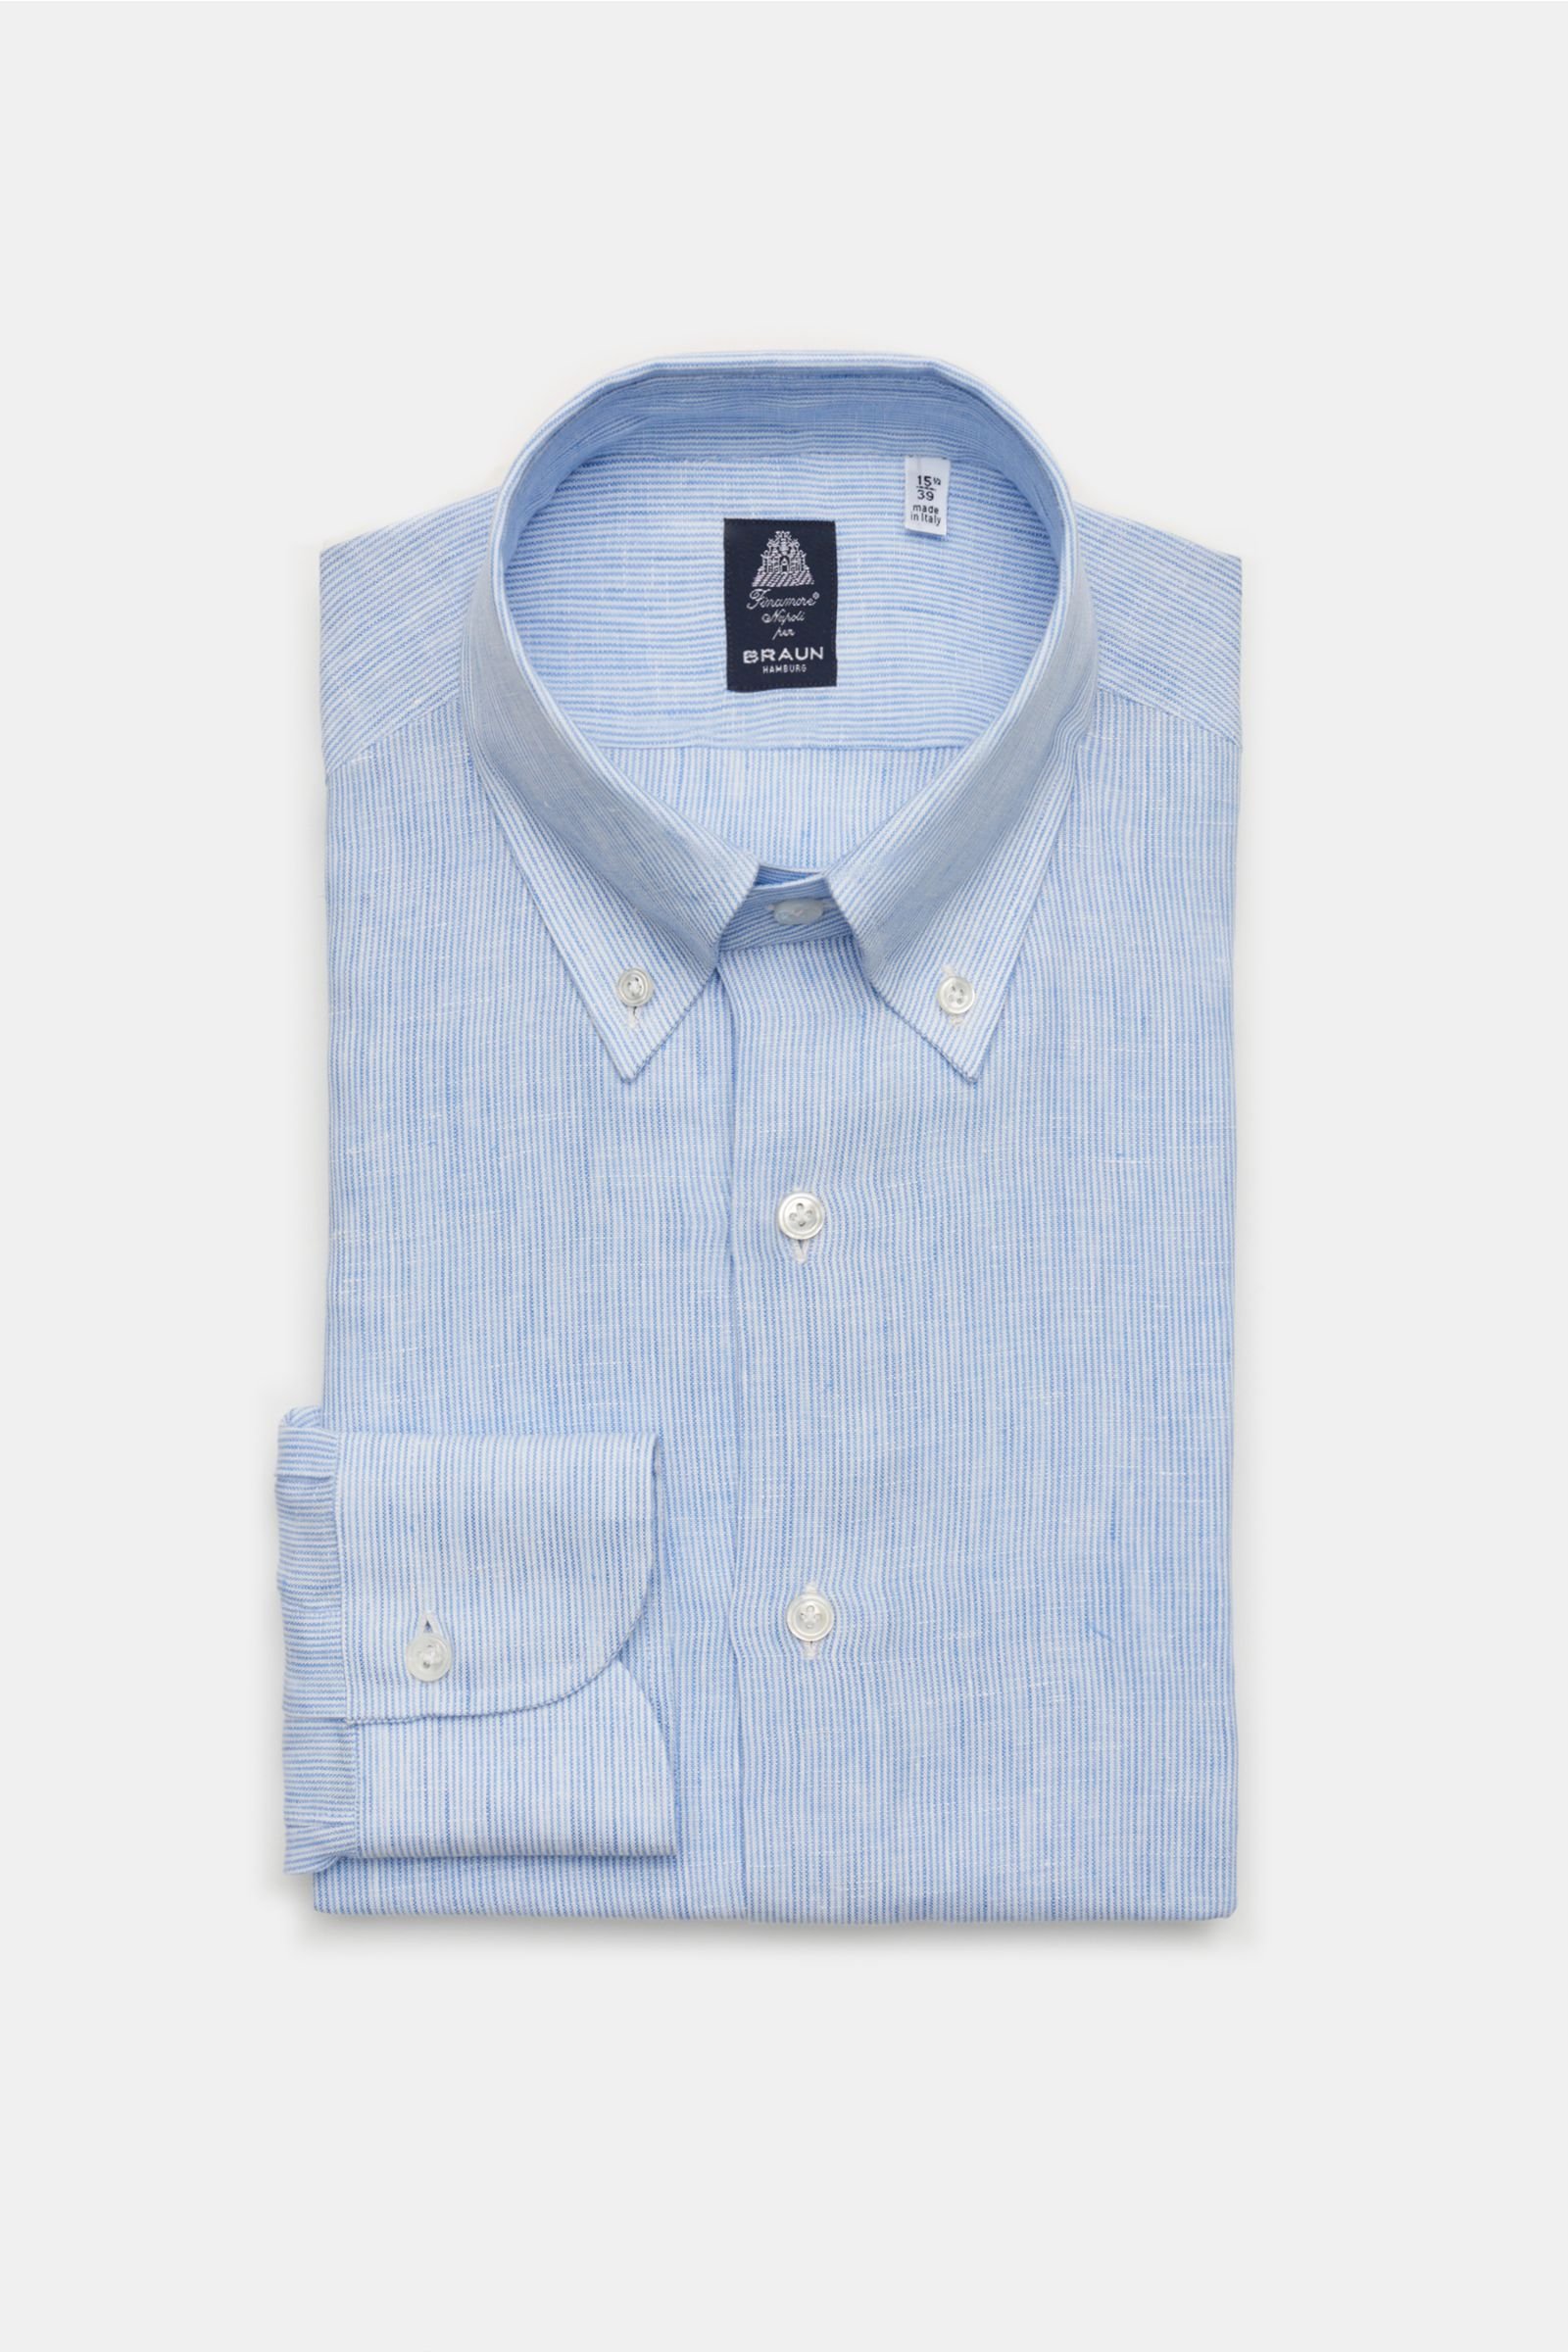 Linen shirt 'Leonardo Napoli' button-down collar light blue/white striped